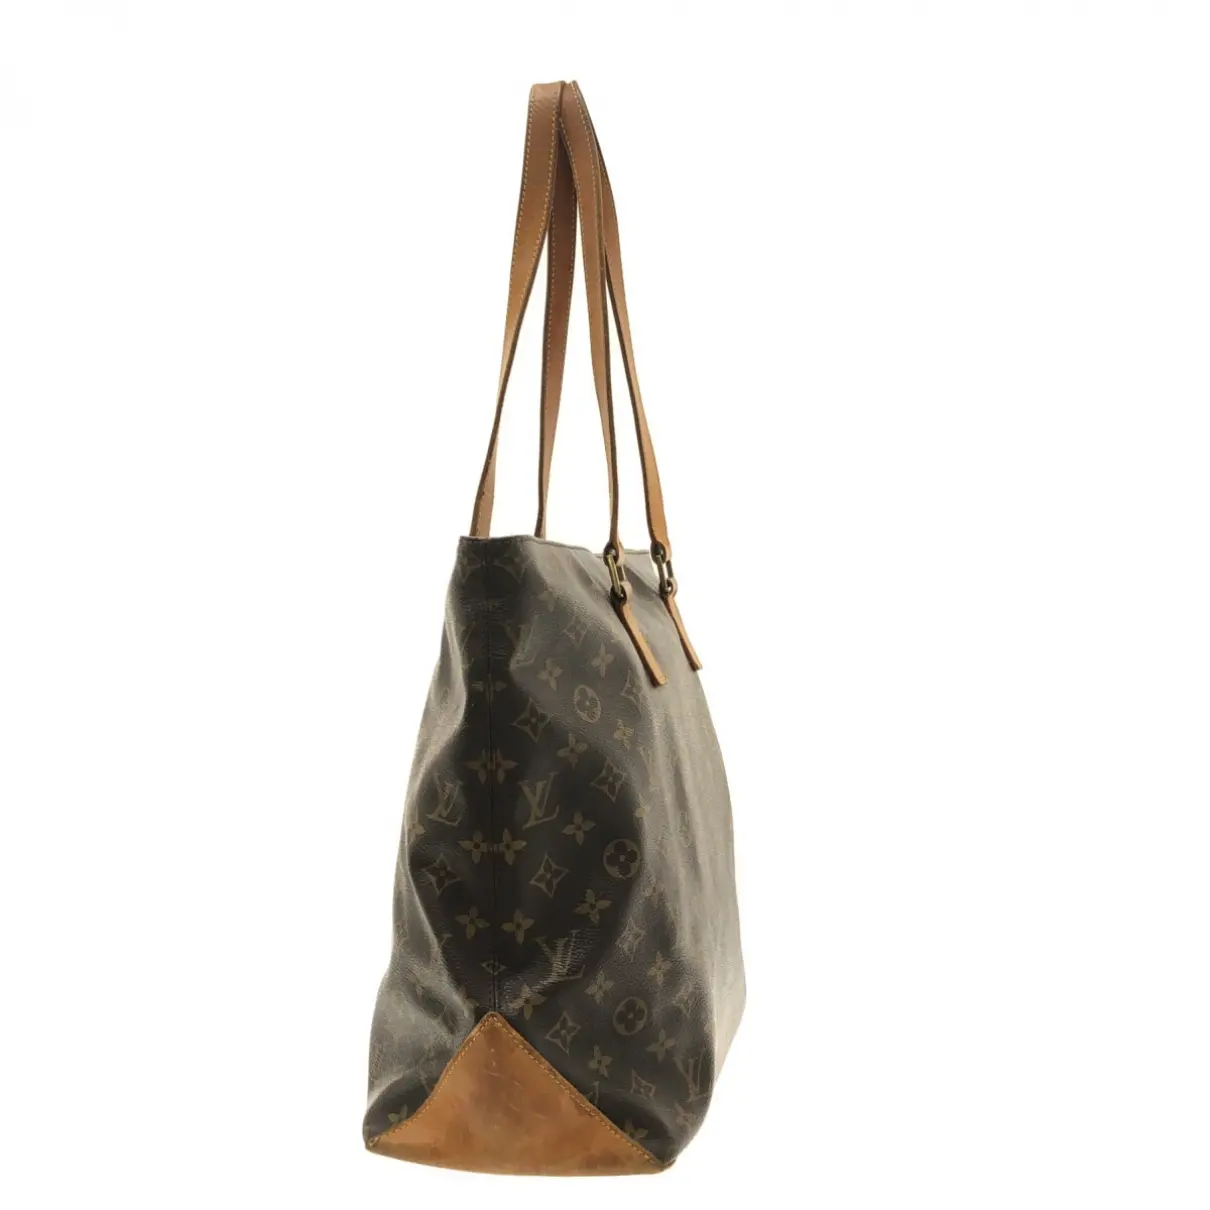 Buy Louis Vuitton Mezzo handbag online